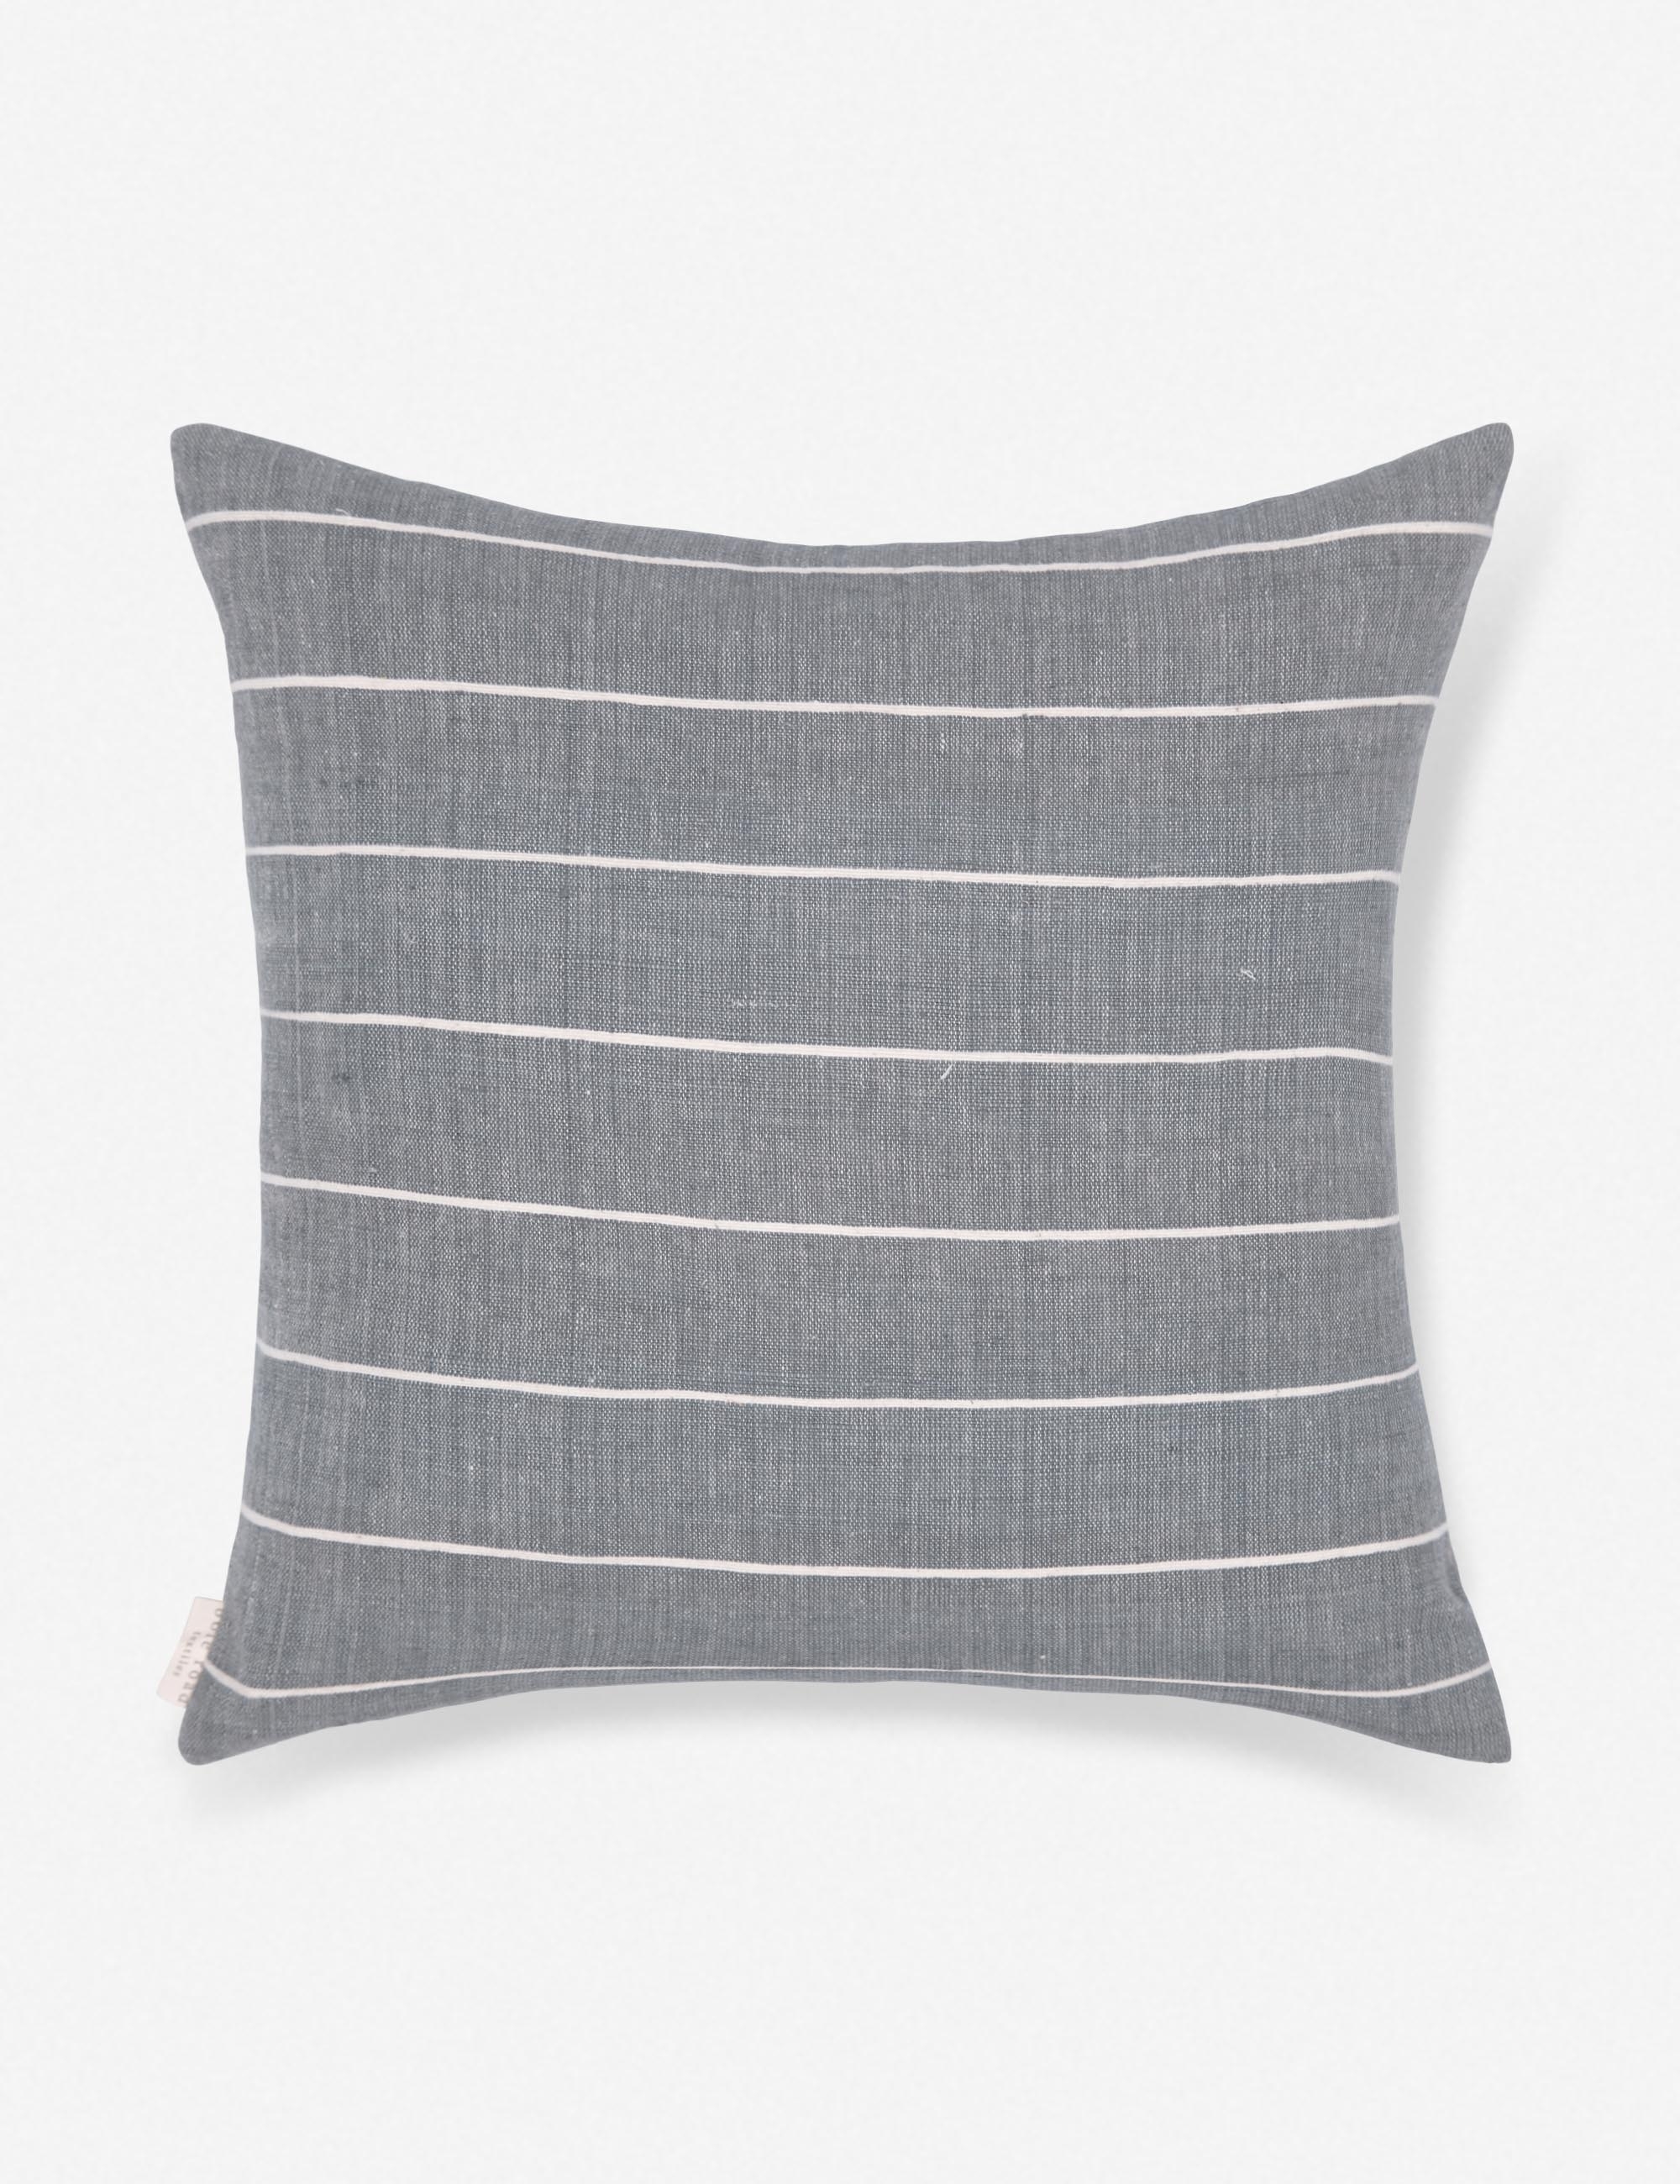 Bolé Road Textiles Melkam Pillow - Image 0